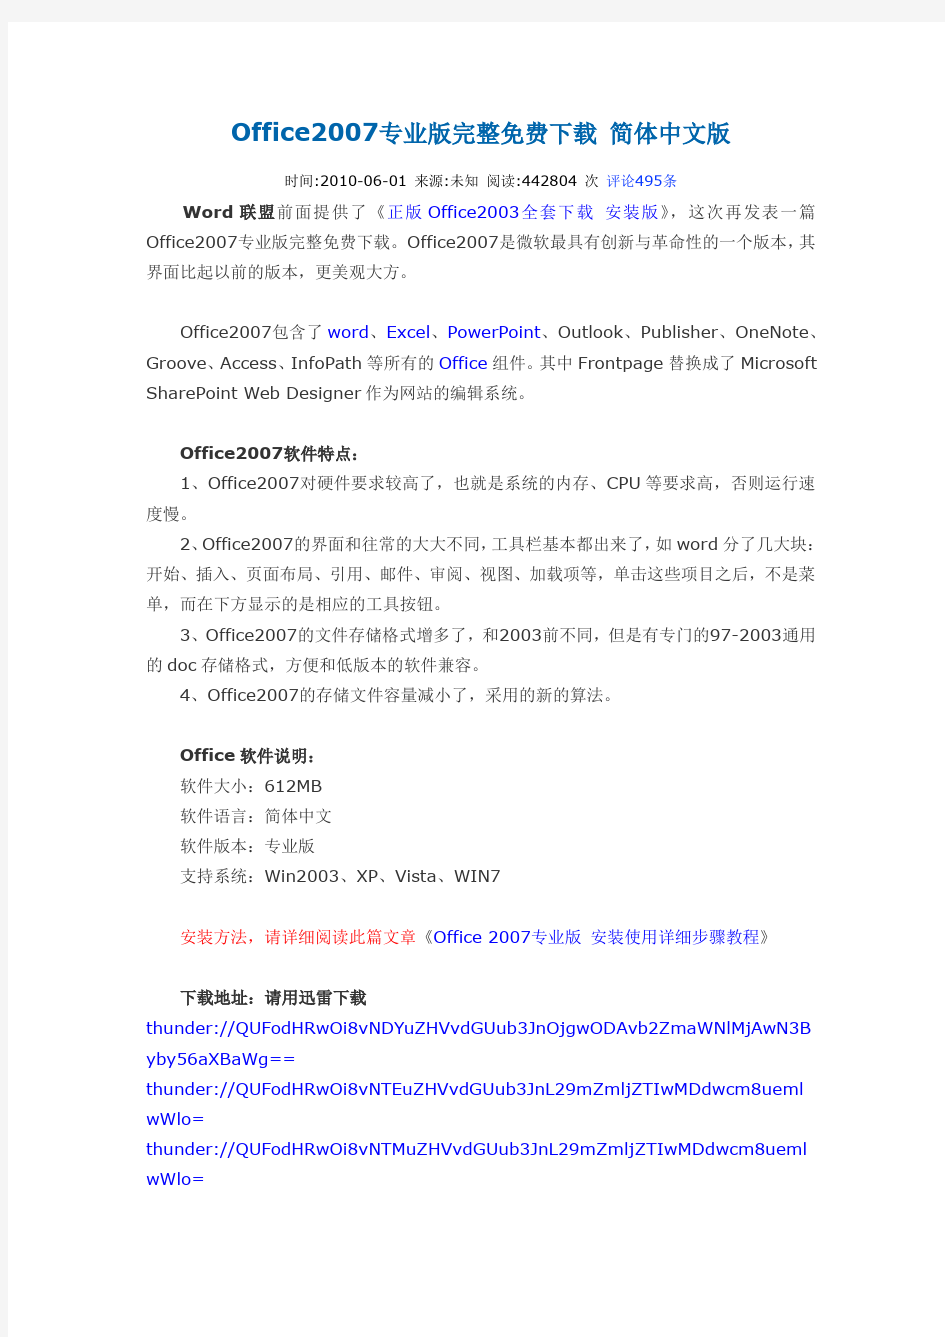 Office2007专业版完整免费下载 简体中文版